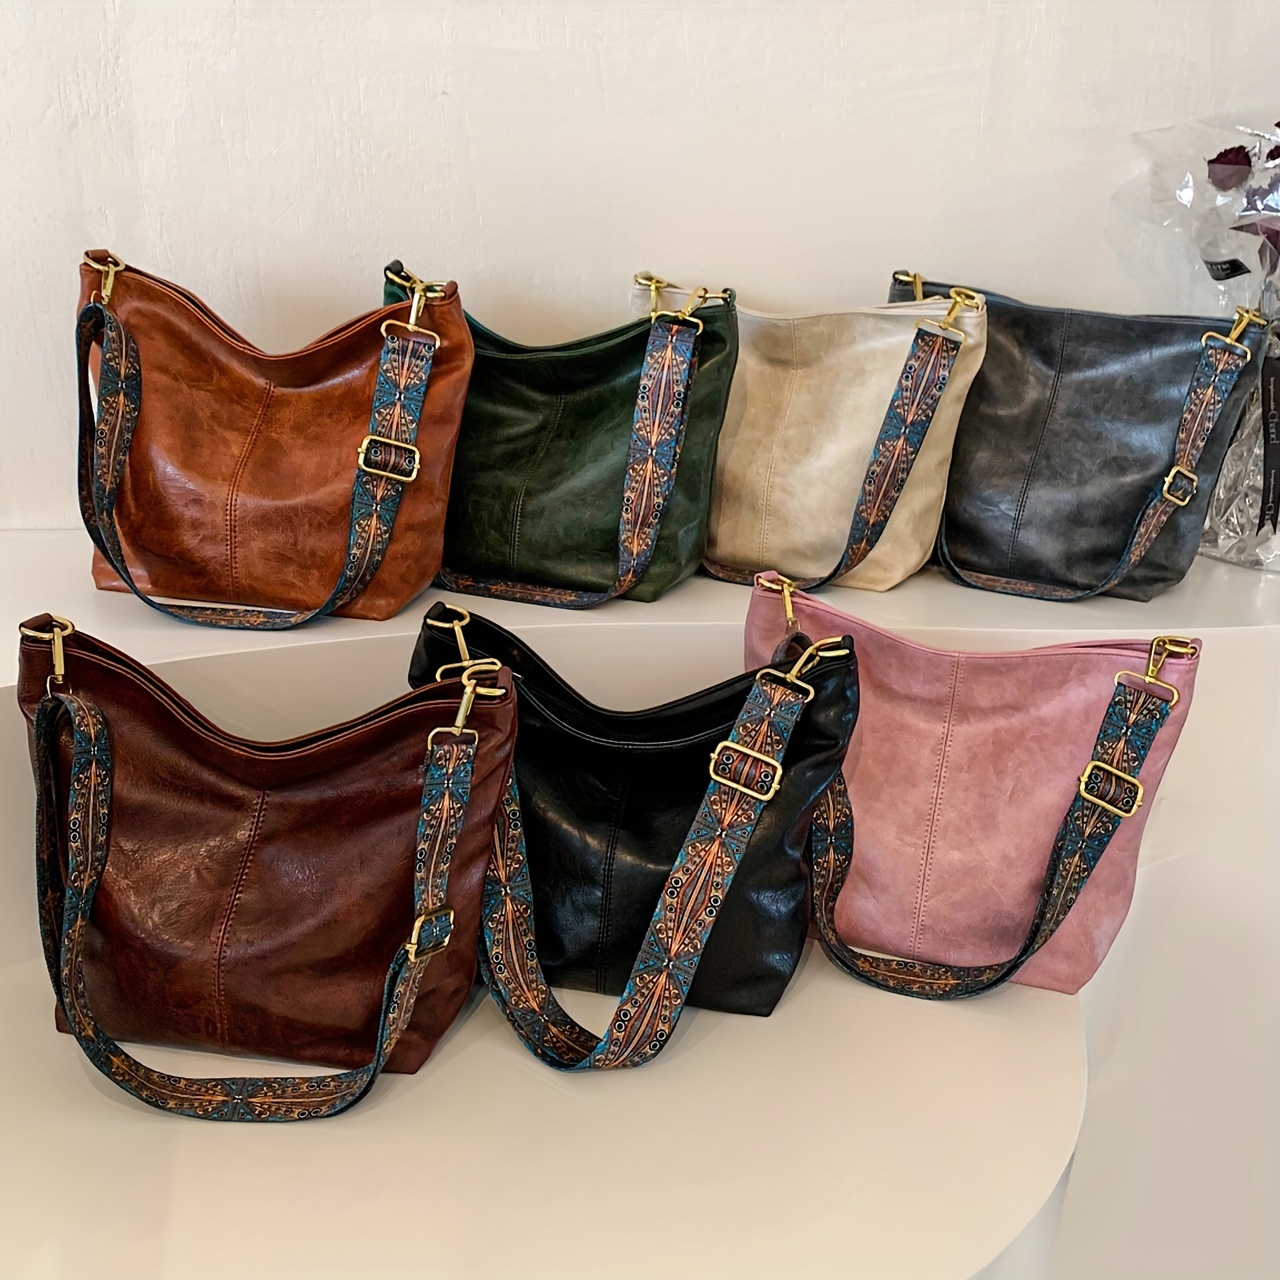 

Vintage Crossbody Hobo Bag, Retro Shoulder Tote Bag, Women's Fashion Bohemian Handbag & Purse